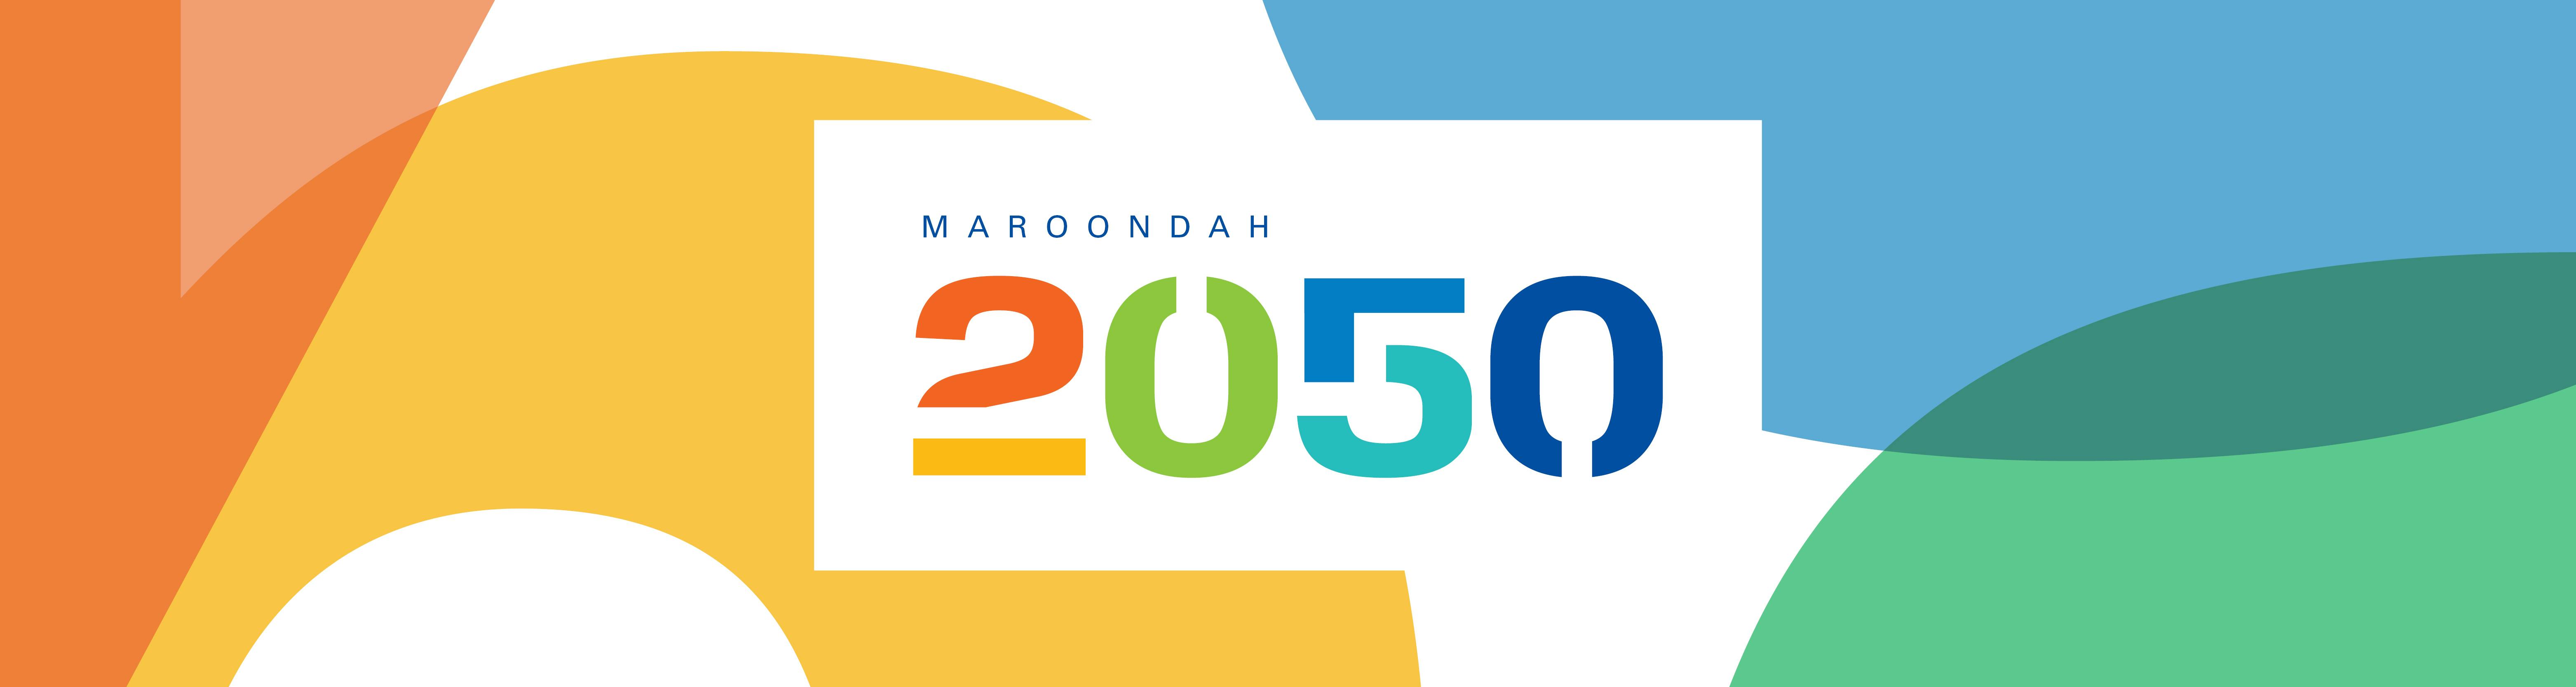 Maroondah 2050 banner